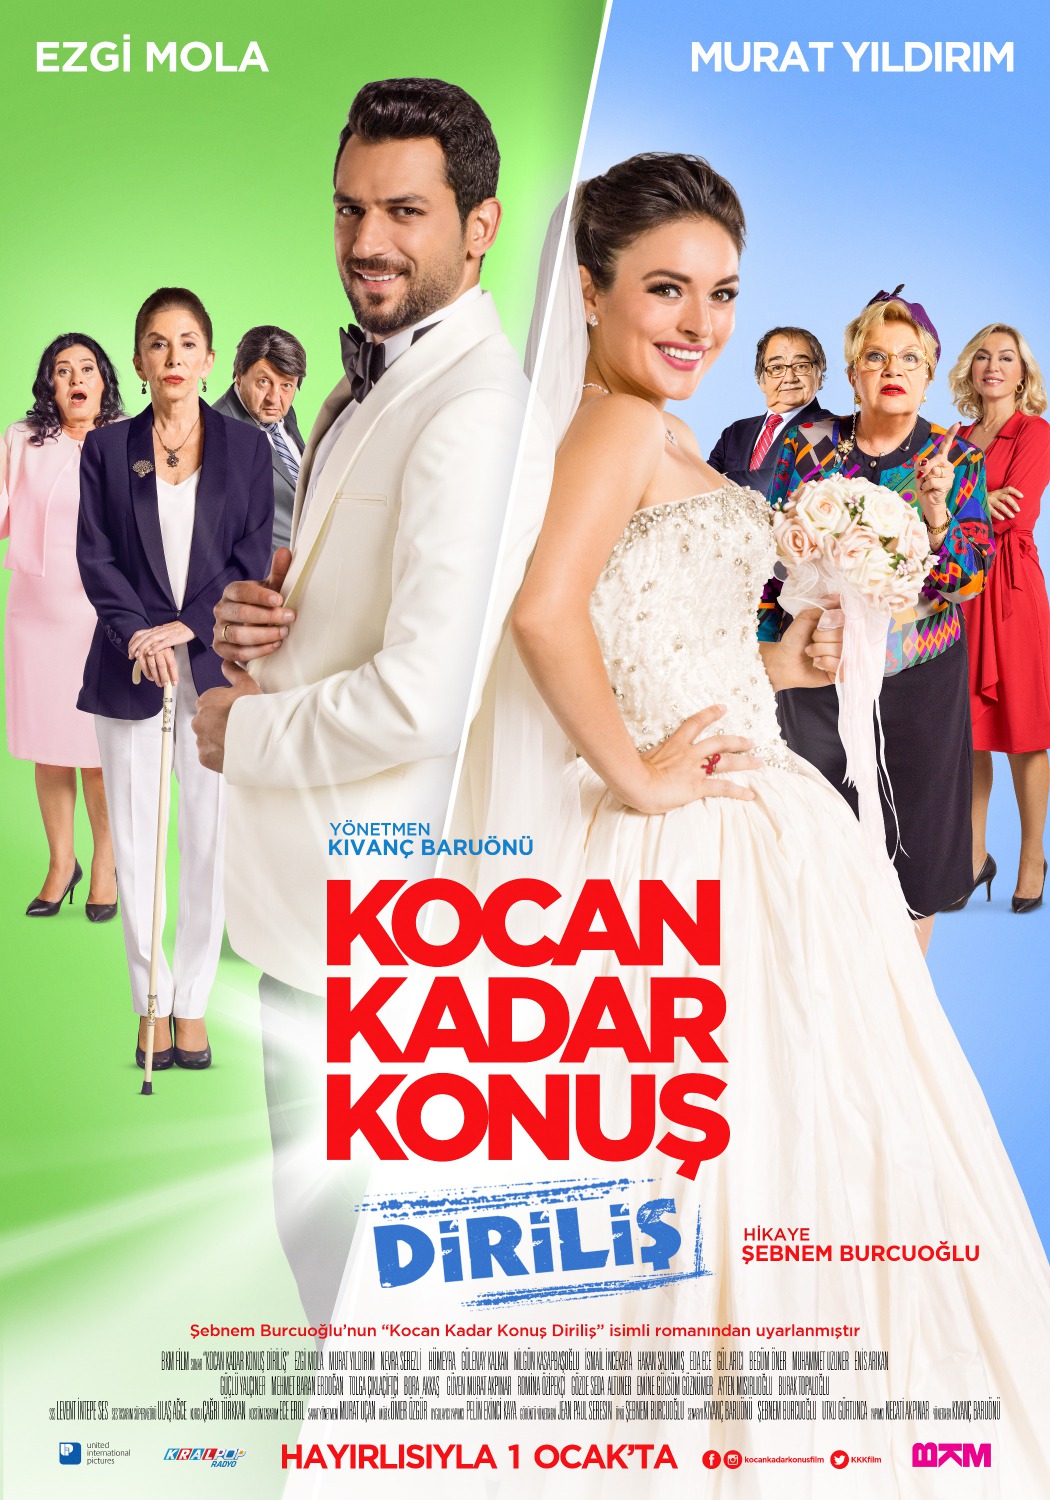 Extra Large Movie Poster Image for Kocan Kadar Konus Dirilis 